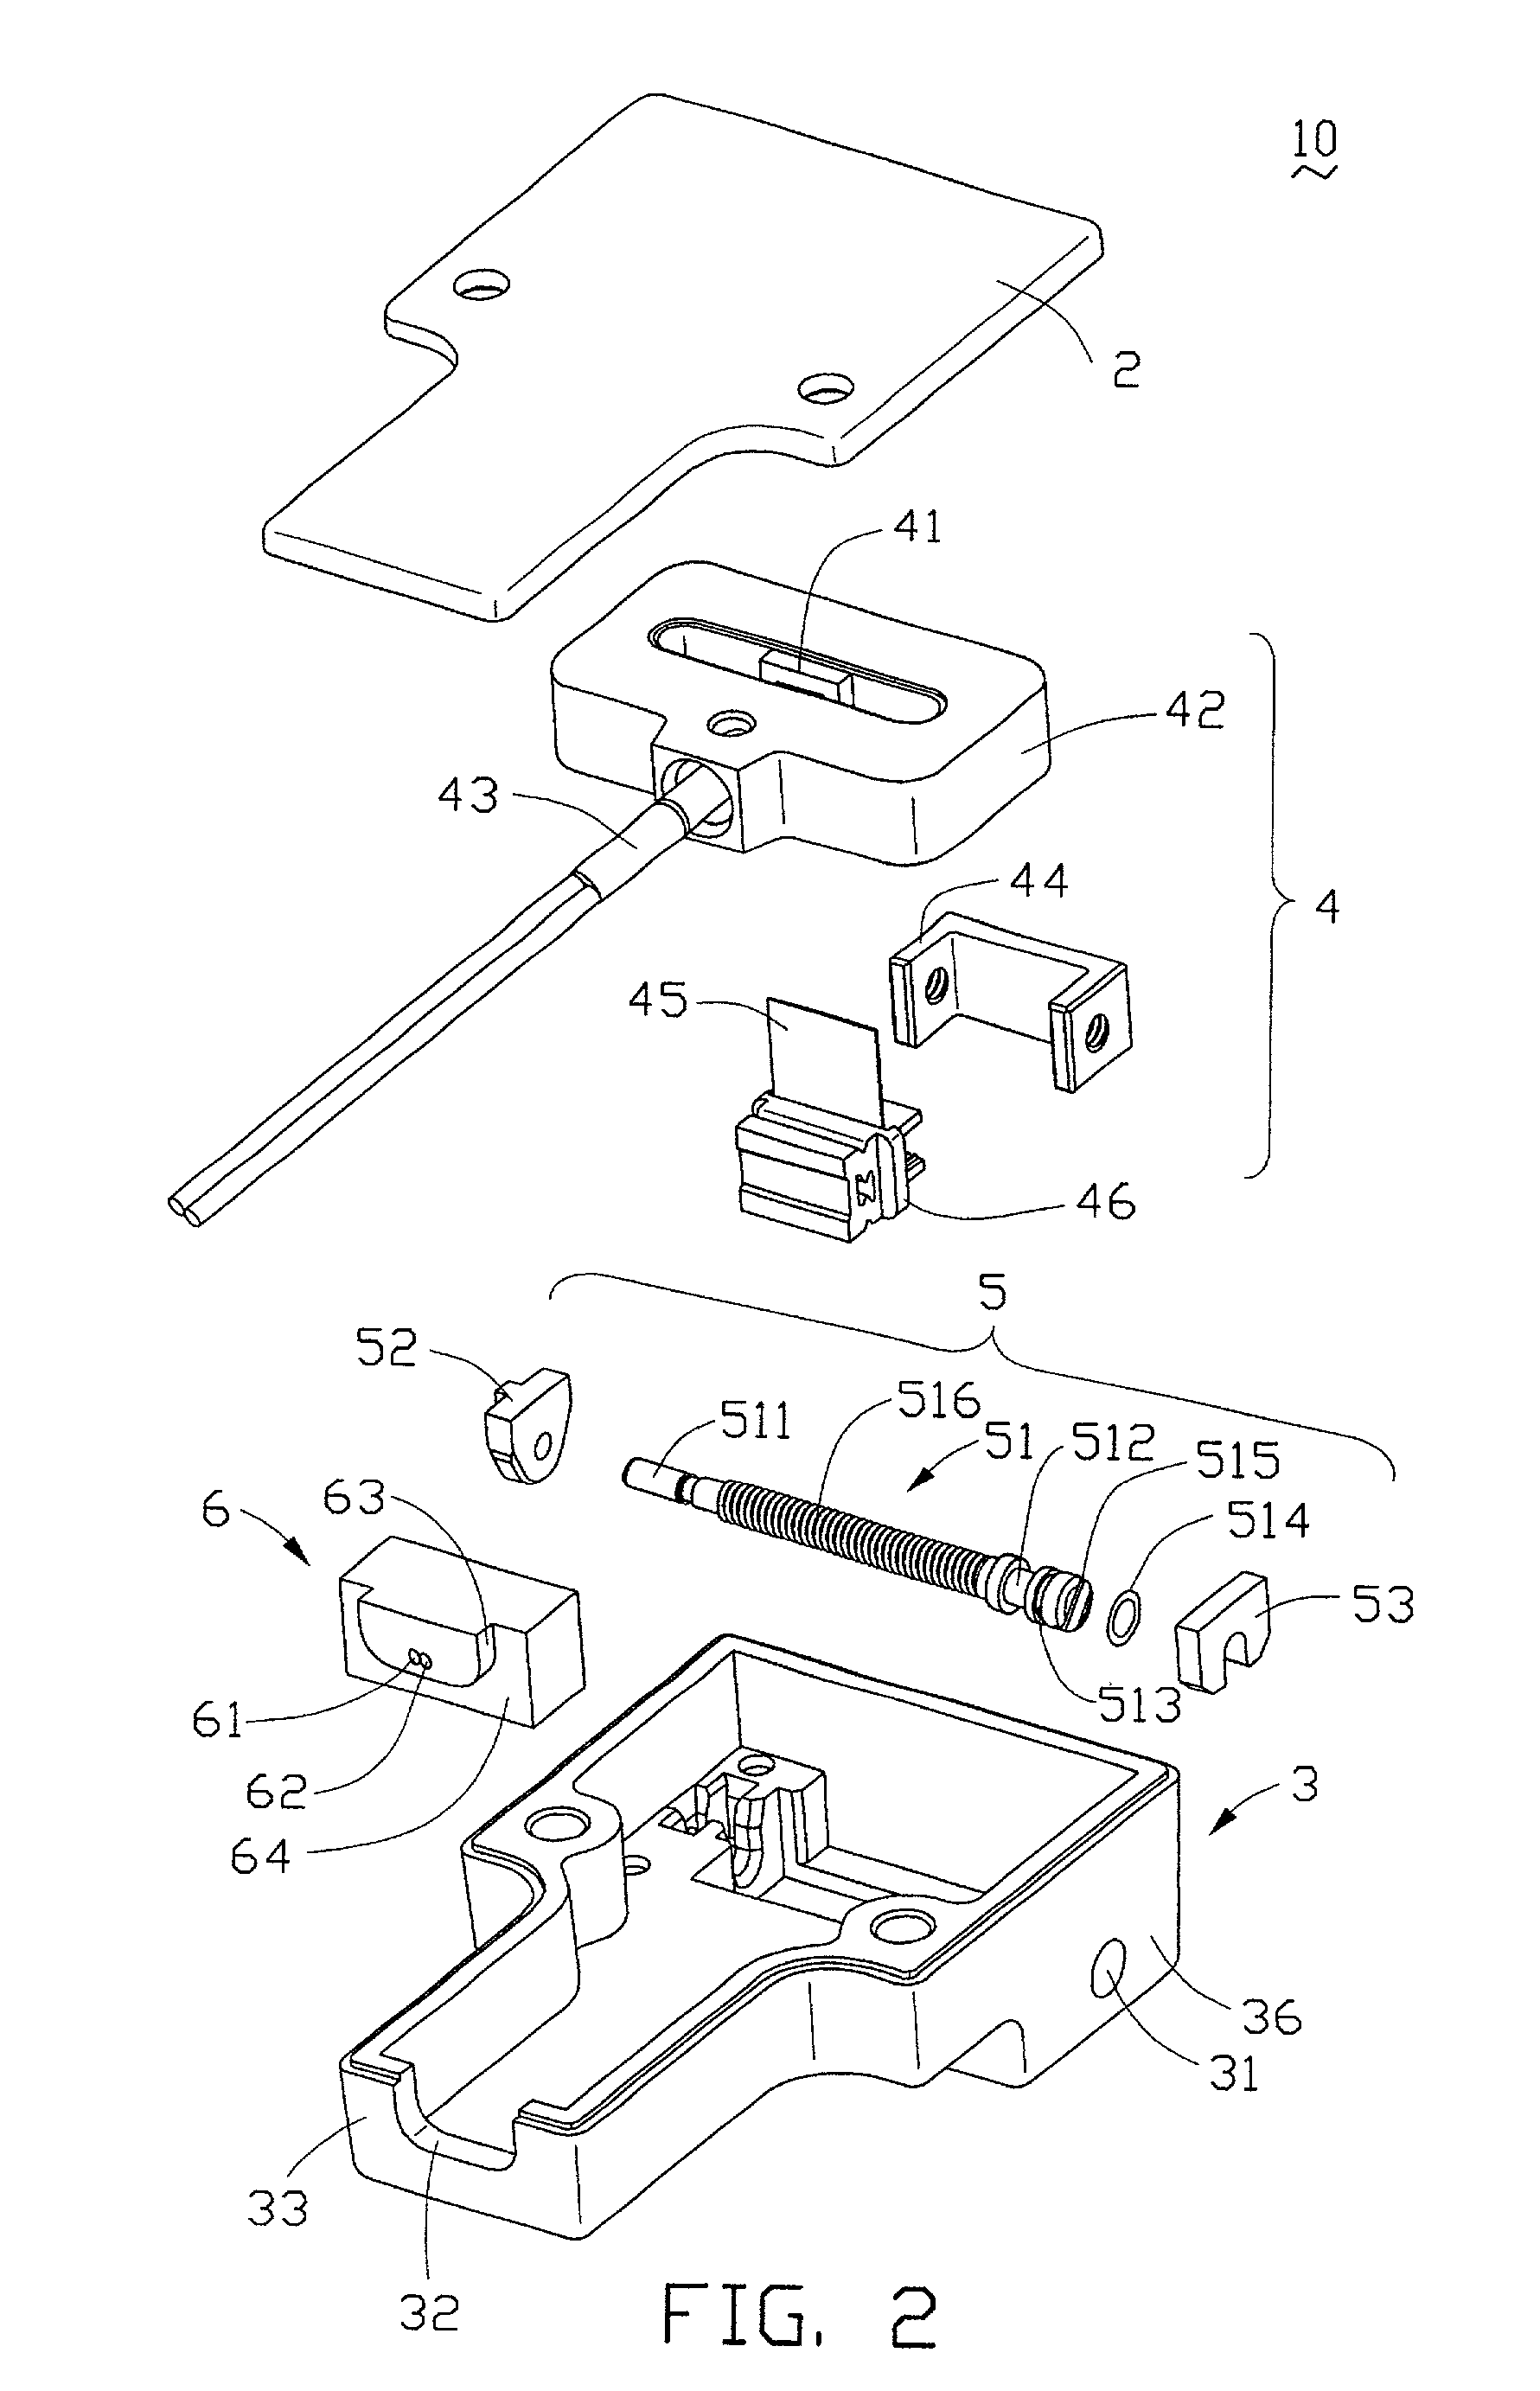 Manual variable optical attenuator having sealing gasket